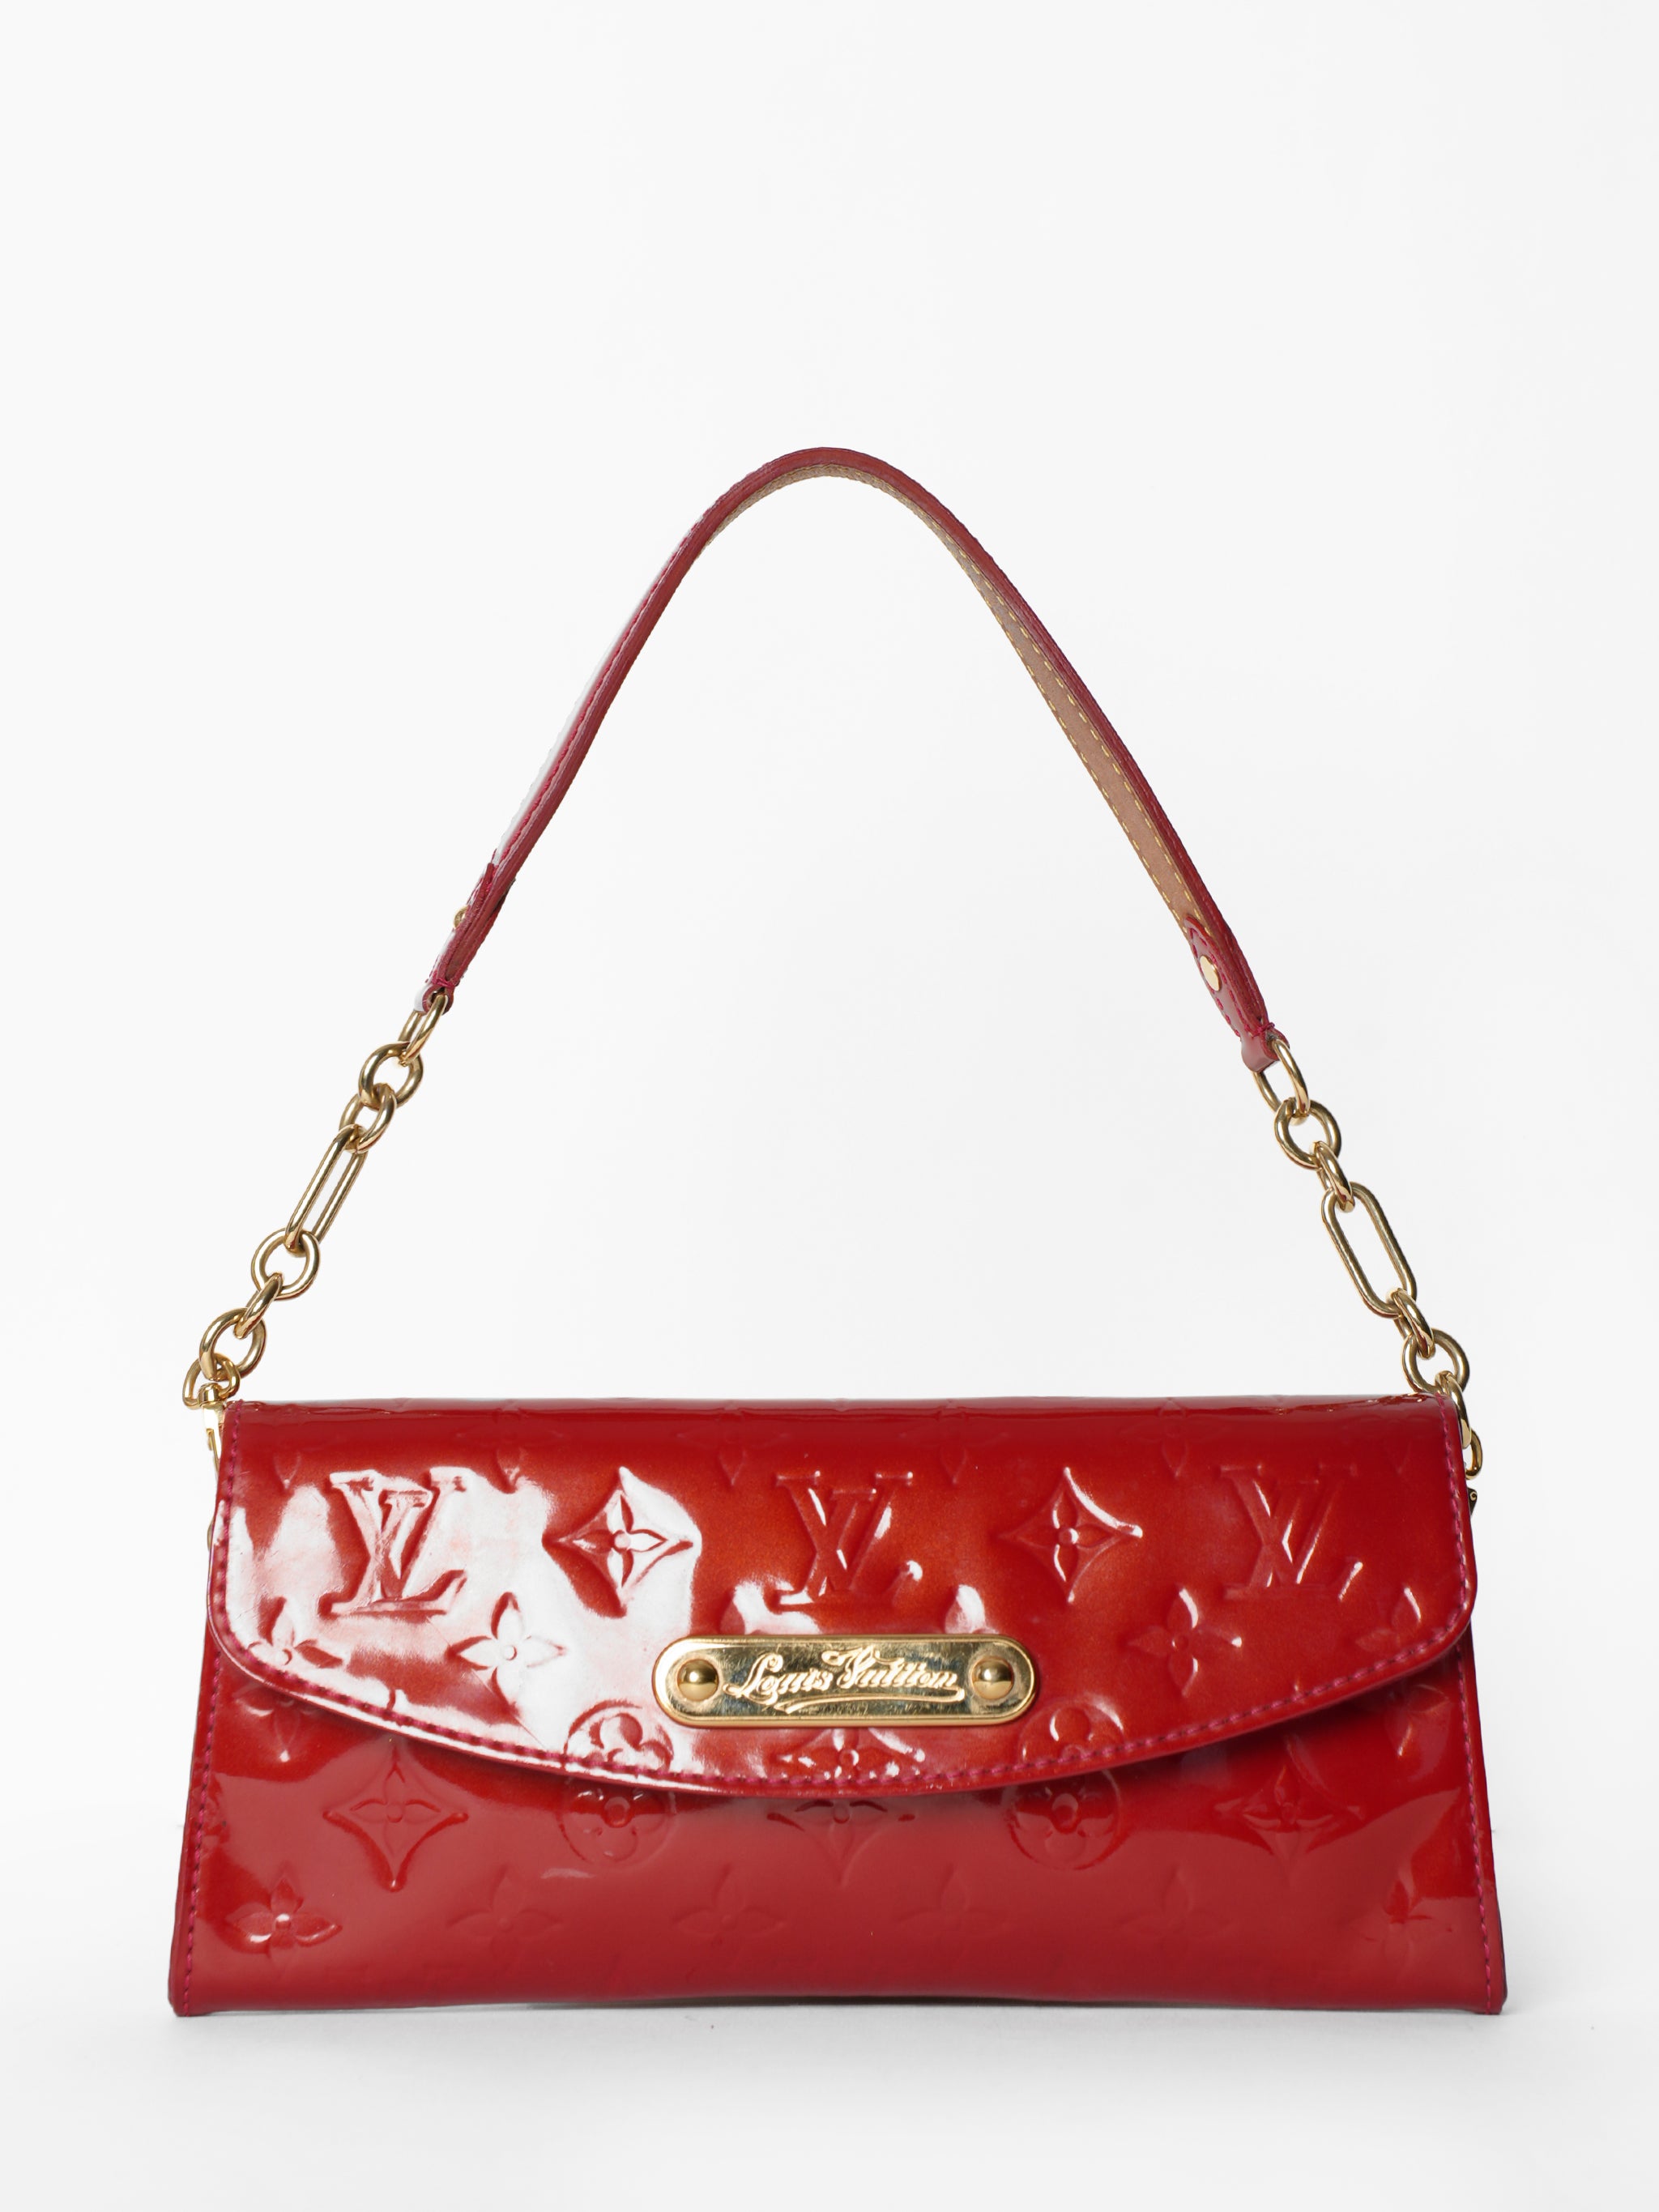 LOUIS VUITTON Monogram Vernis Sunset Boulevard Clutch Handbag in